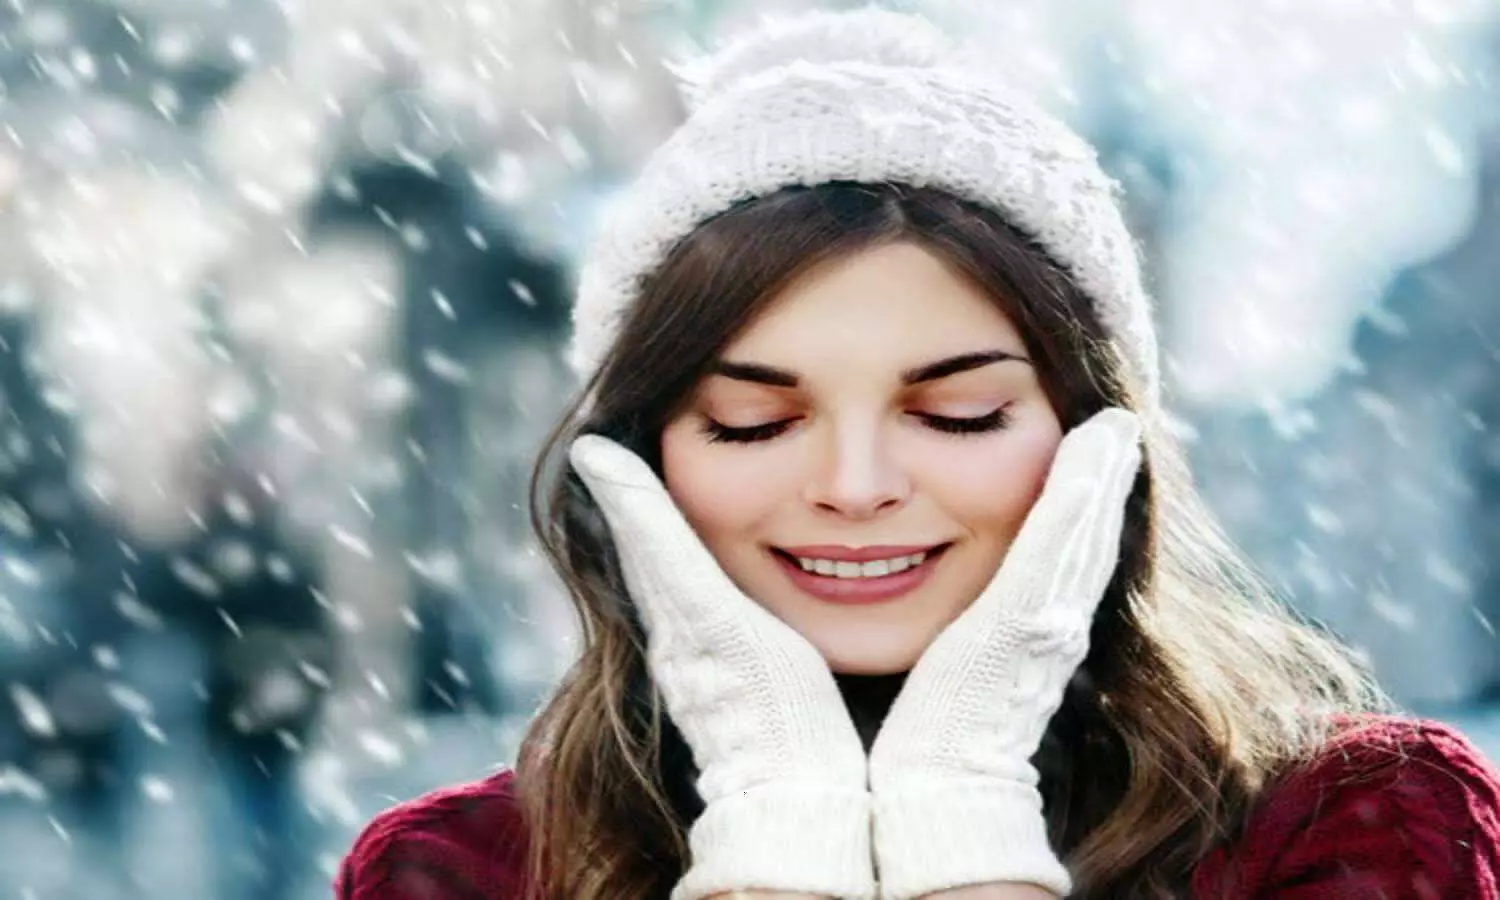 Tips for winter skin care